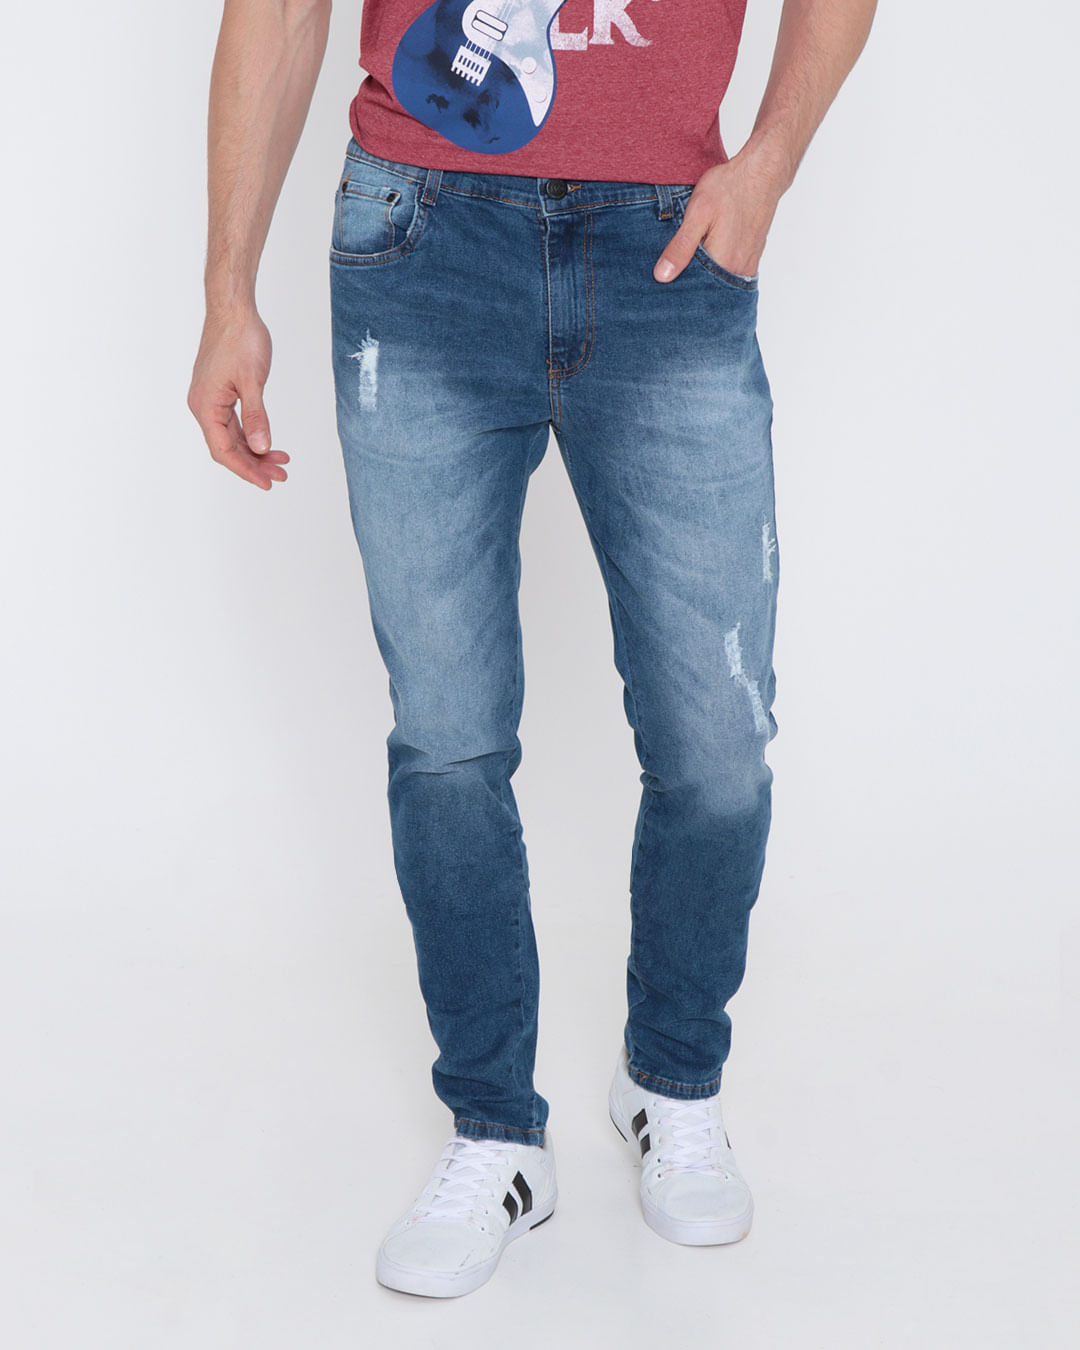 Calca-Jeans-Masculina-Slim-Azul-Medio